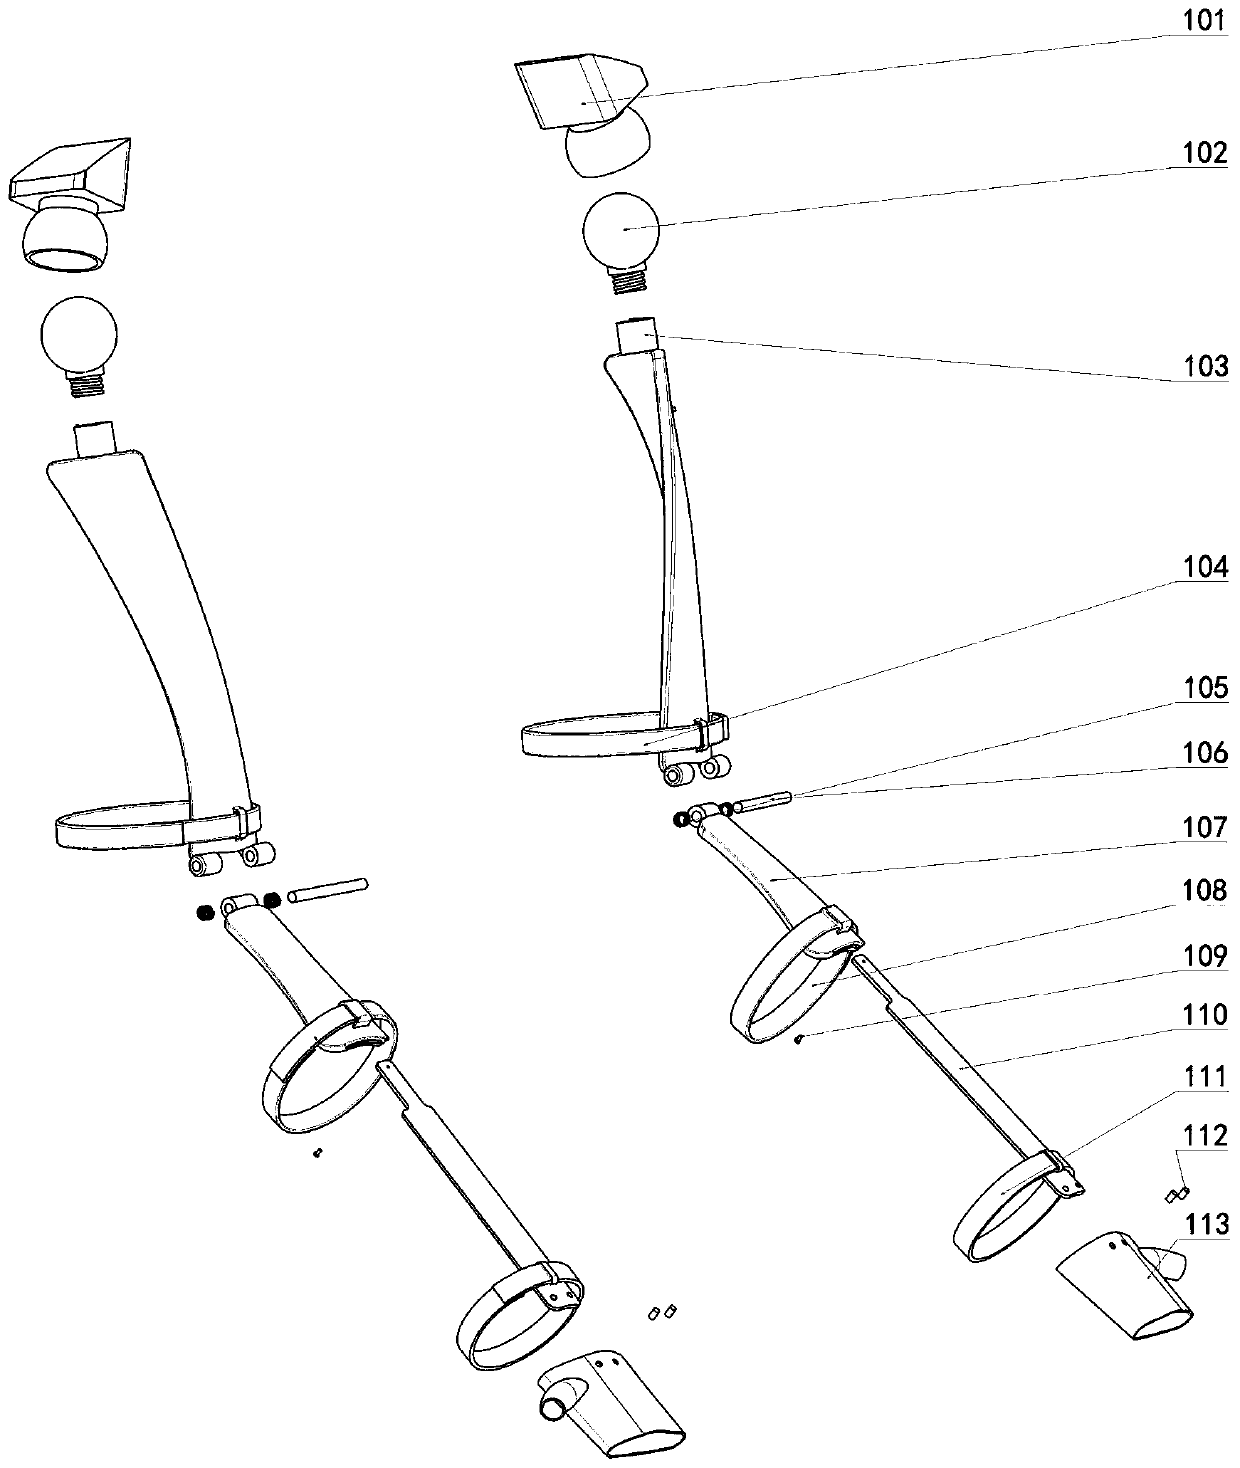 Active upper limb movement rehabilitation assisting exoskeleton